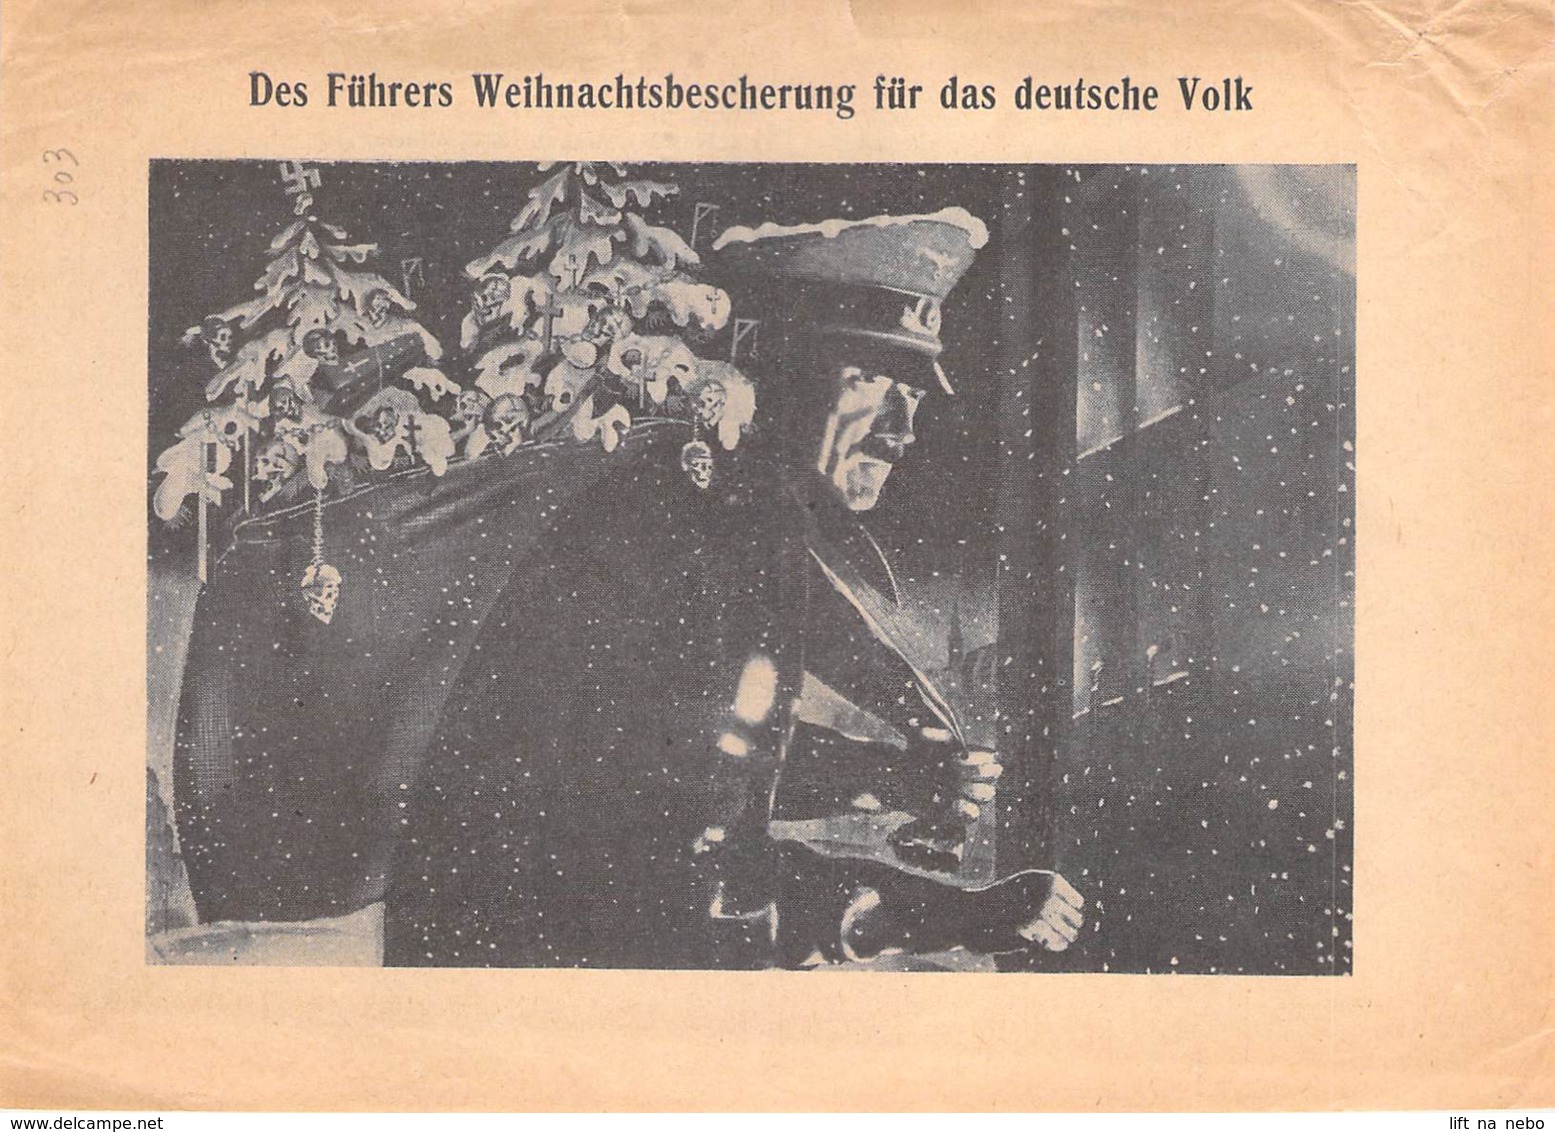 WWII WW2 Leaflet Flugblatt Tract Soviet Propaganda Against Germany CODE 578  FREE STANDARD SHIPPING - 1939-45